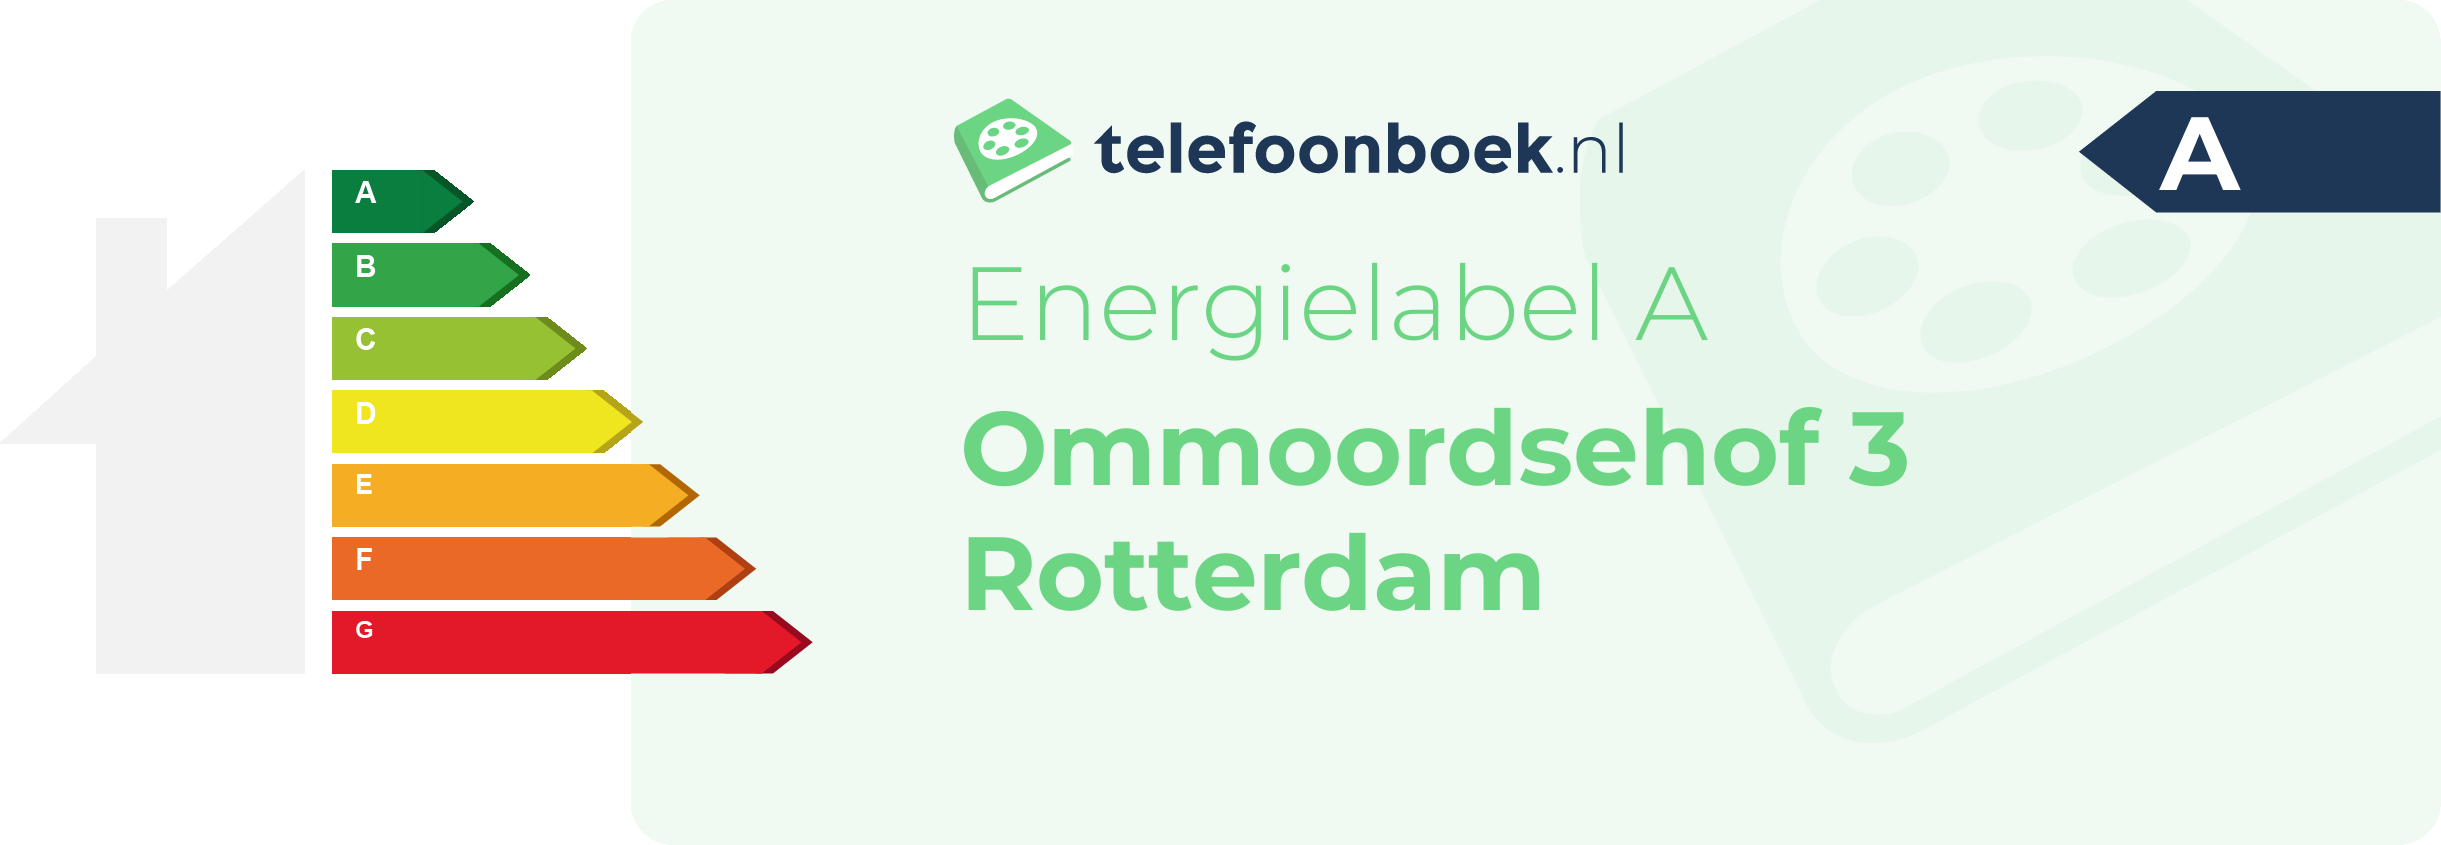 Energielabel Ommoordsehof 3 Rotterdam